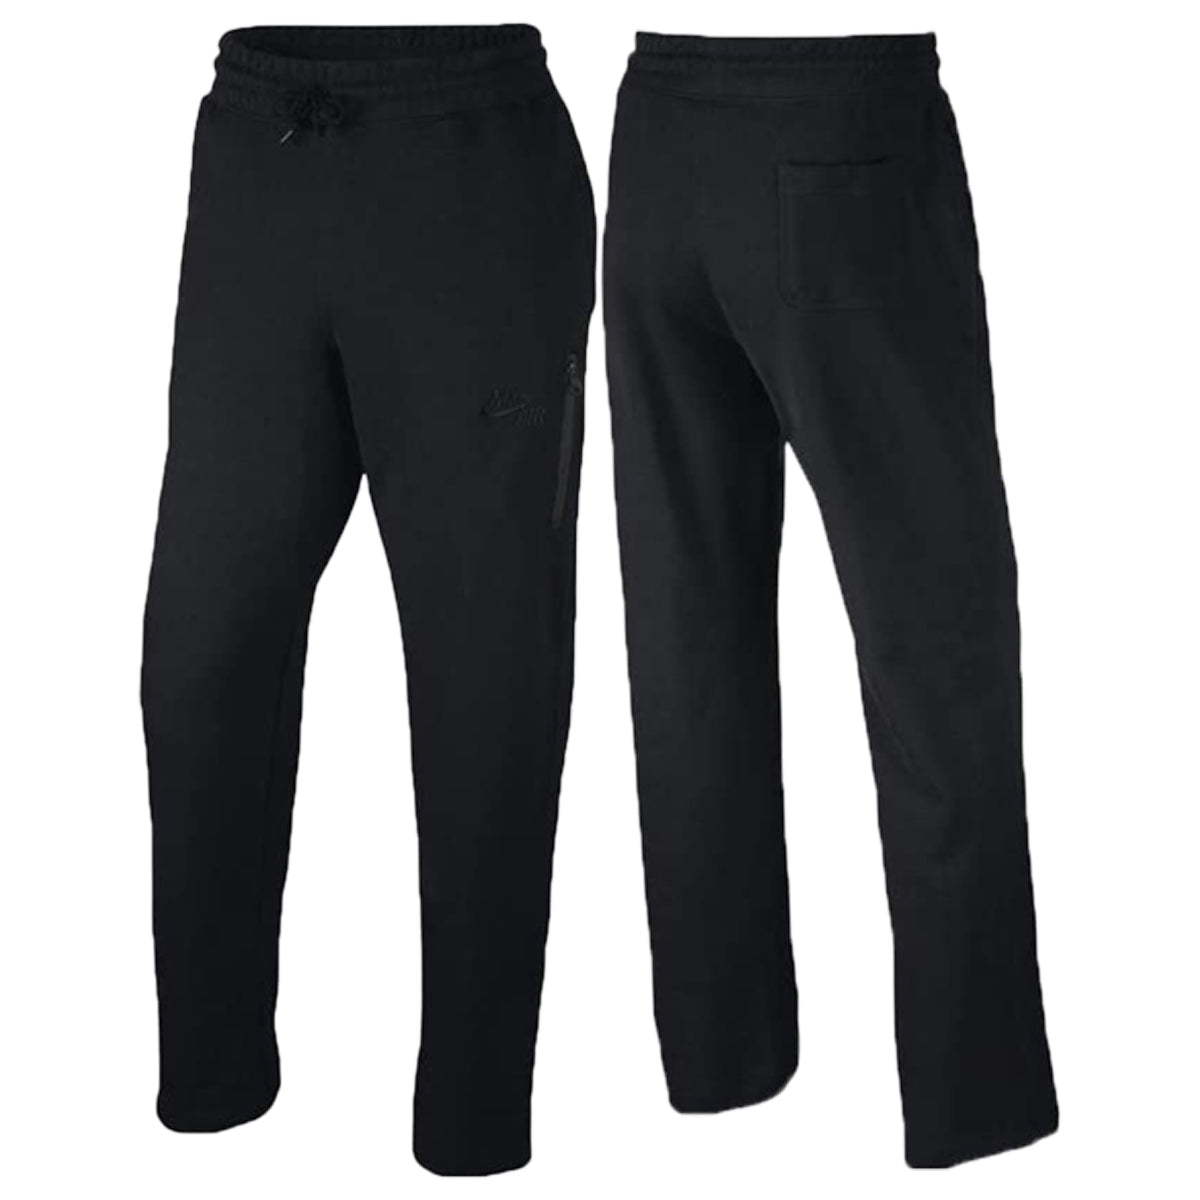 Nike Pivot Basketball Pants Mens Style : 631900